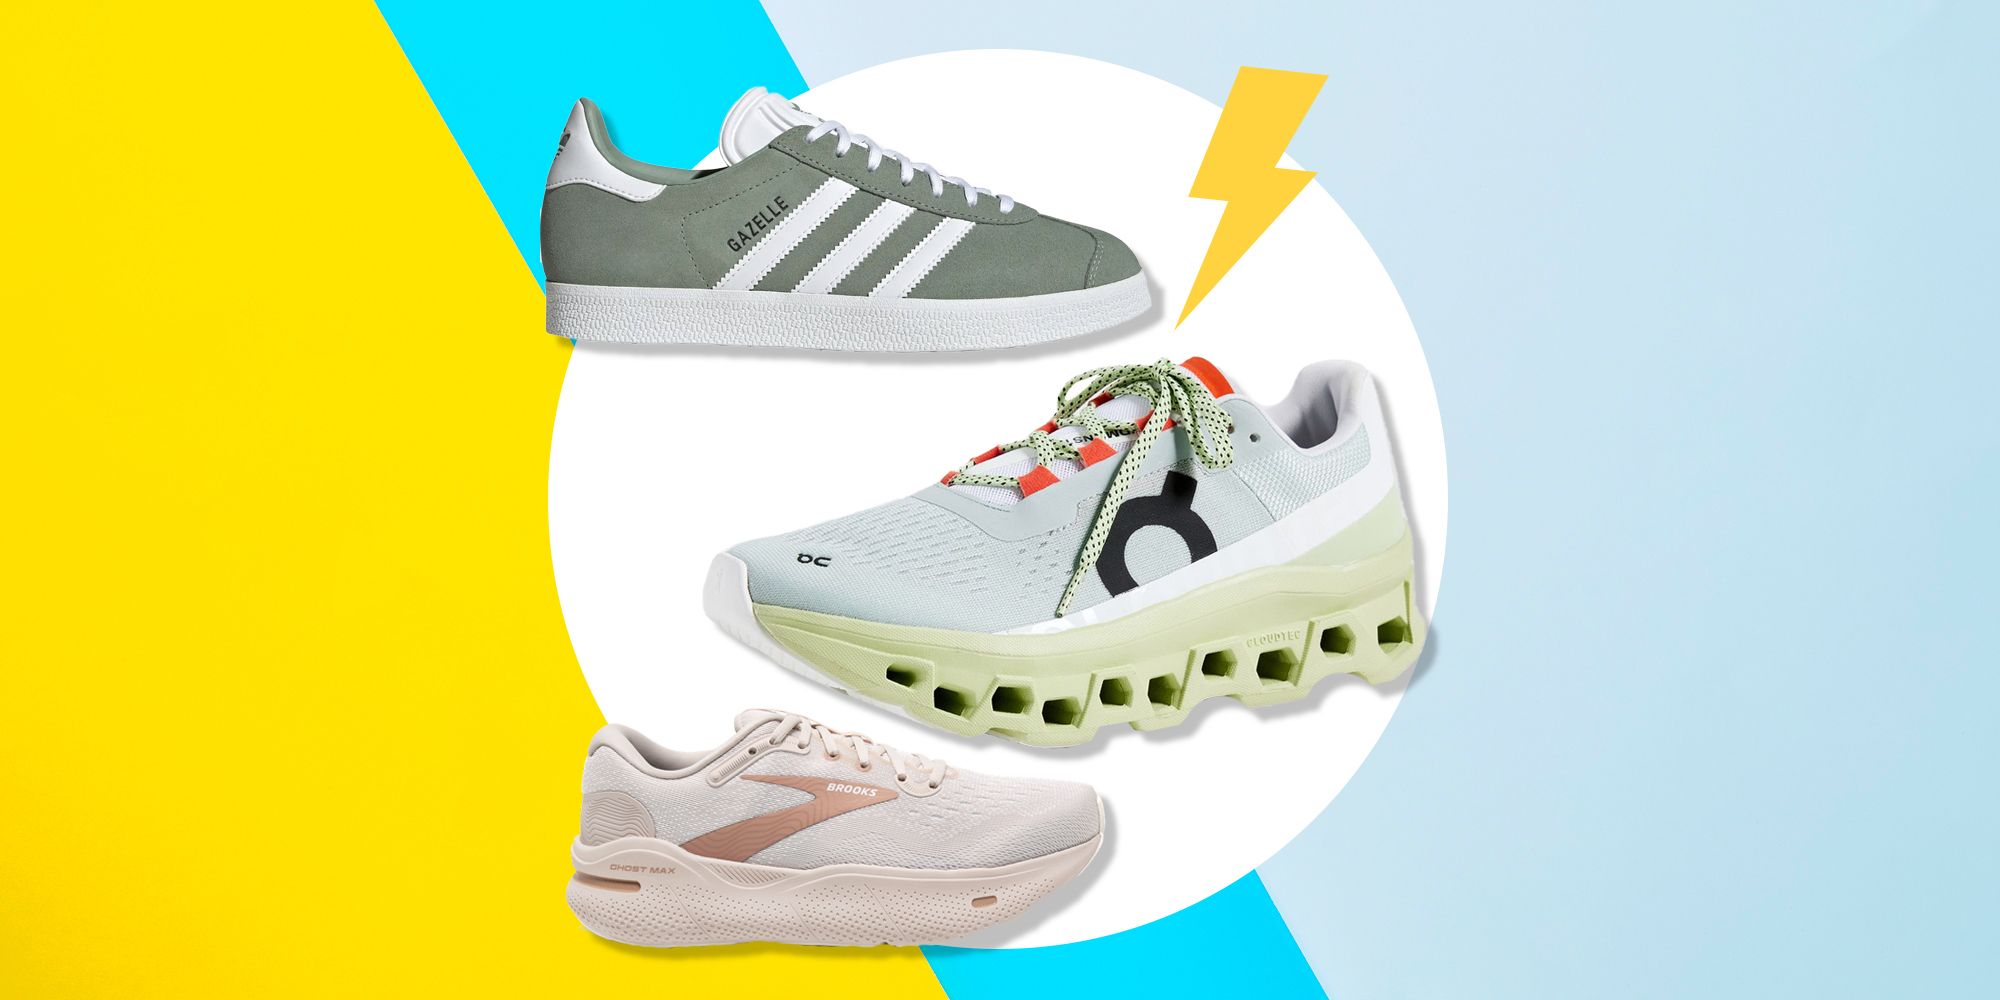  Women's Trendy Sneakers Walking Shoes for Women Sport Shoes  Mesh Casual Shoes Knit Detail Slip On Running Shoes Workout Sport Work  Casual Tennis (Pink, 6.5)